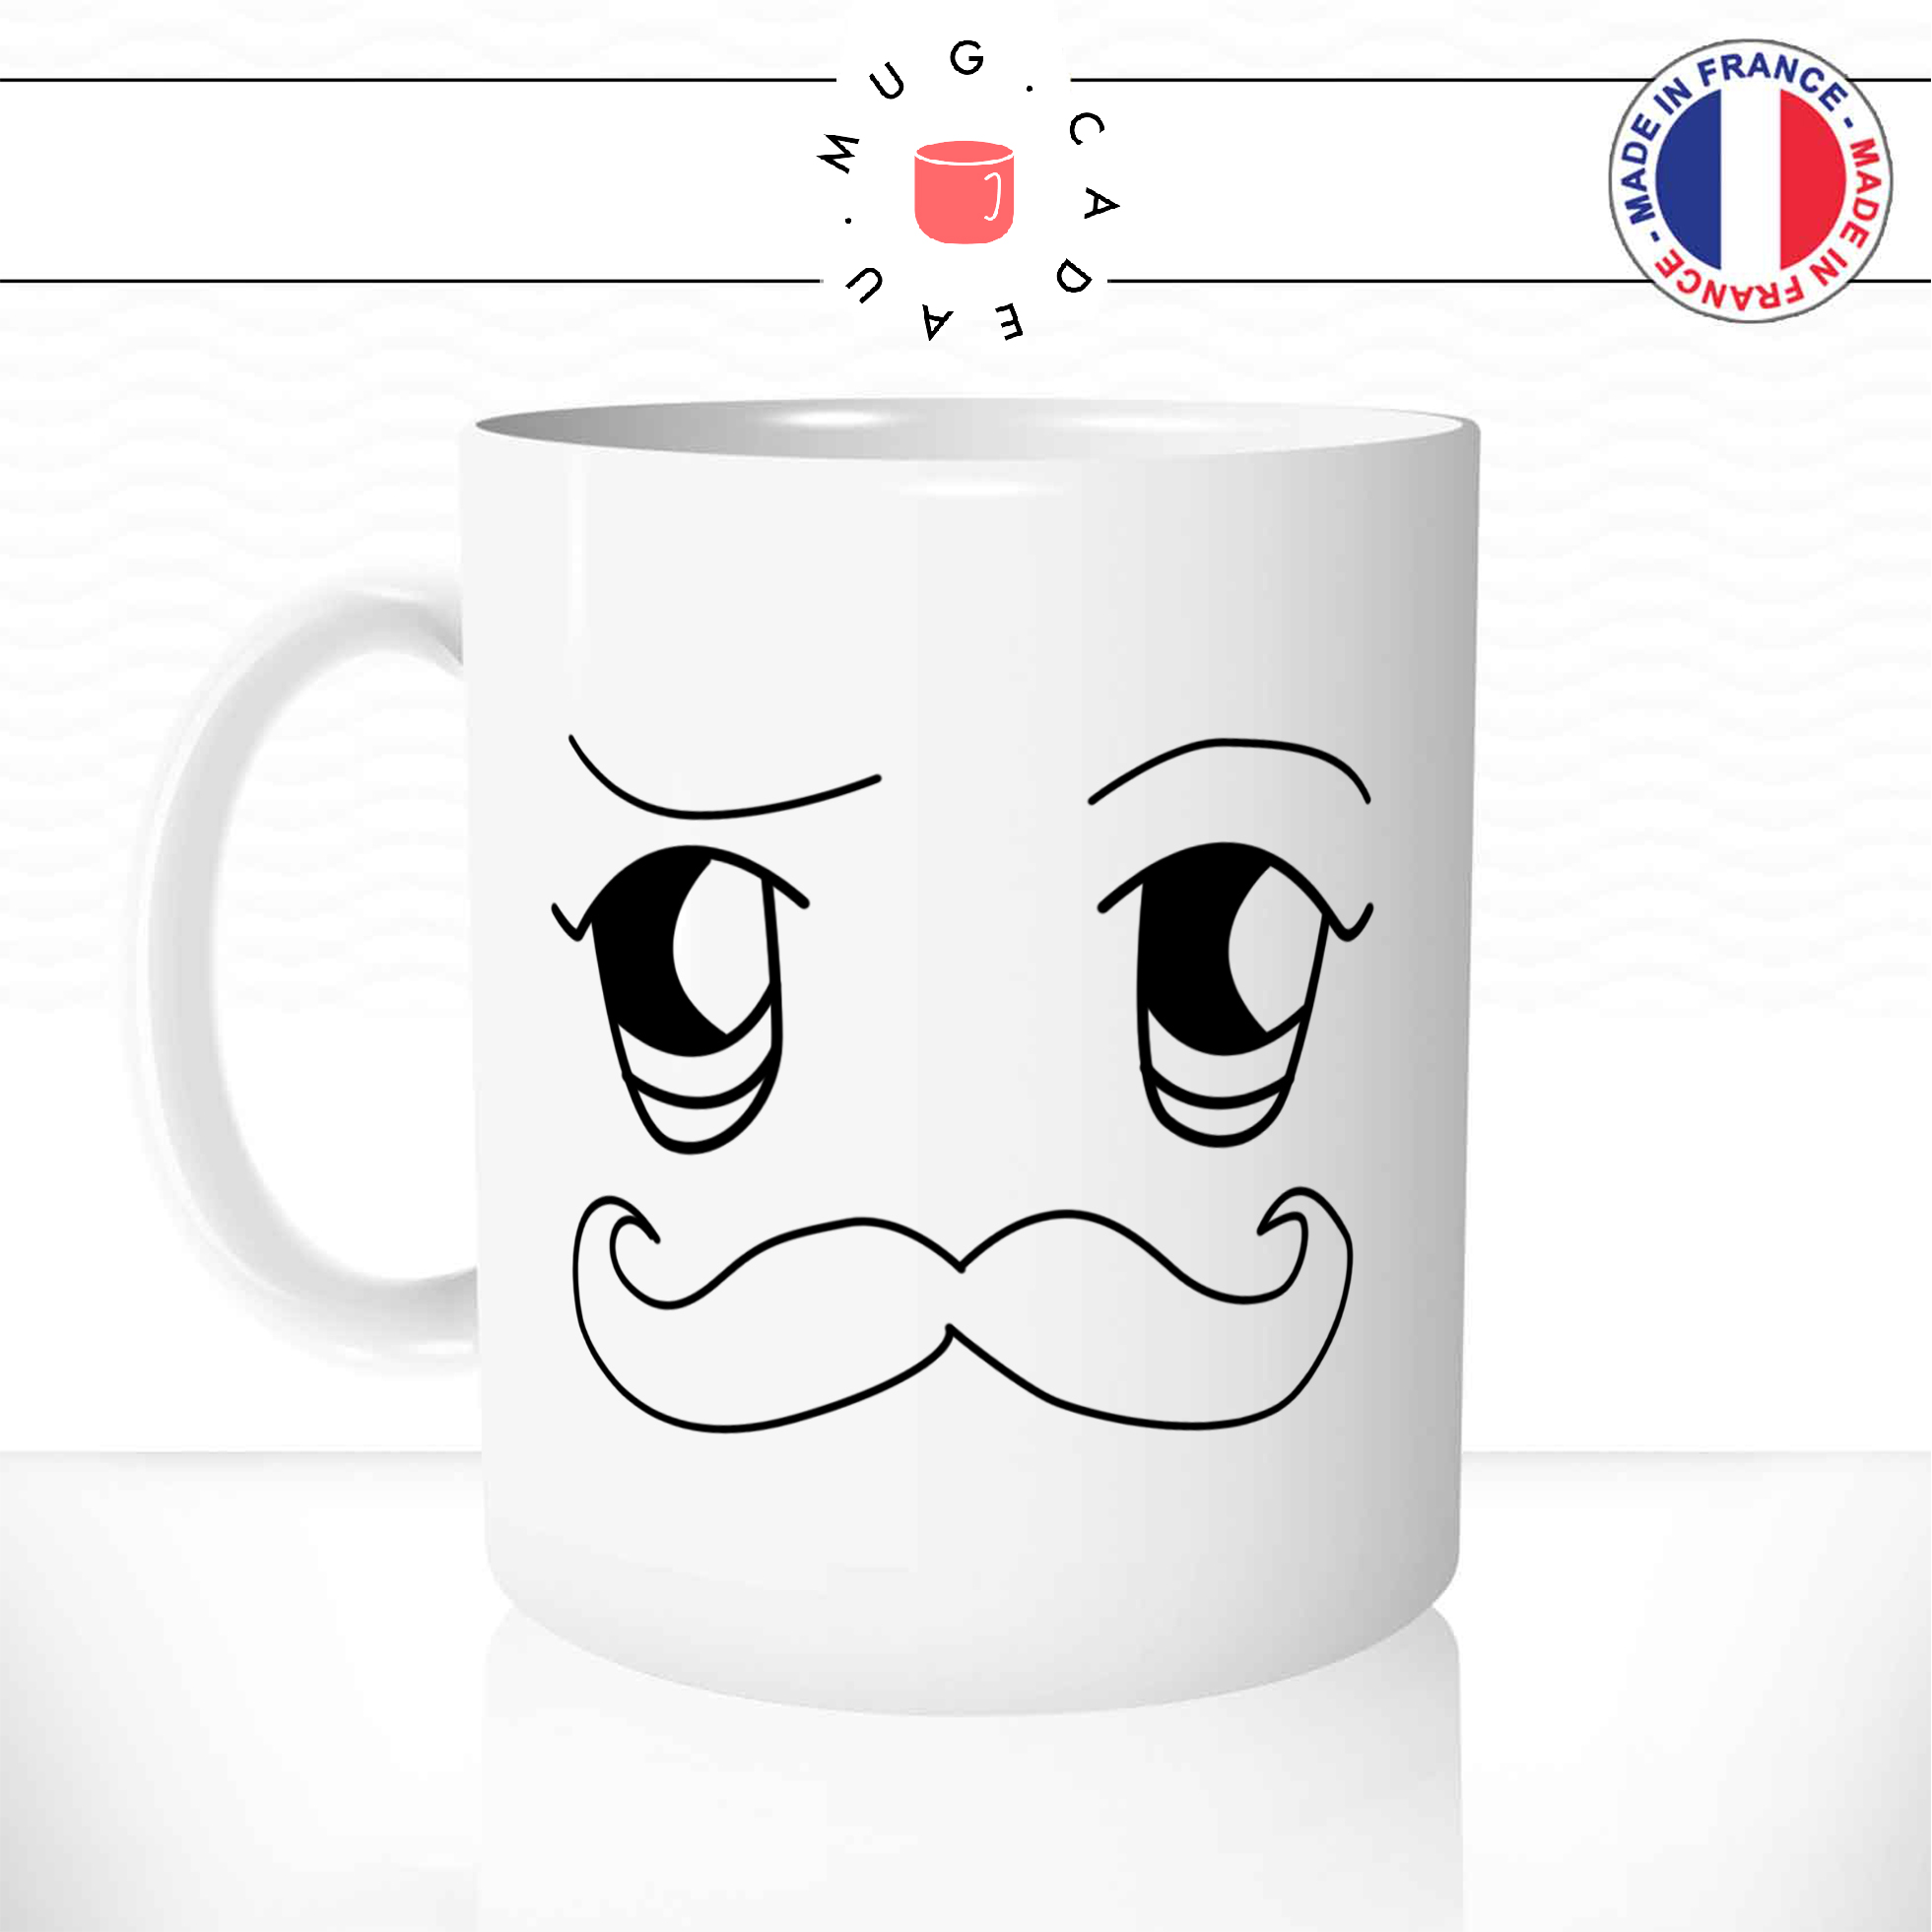 mug-tasse-ref4-visage-noir-blanc-moustache-cafe-the-mugs-tasses-personnalise-anse-gauche